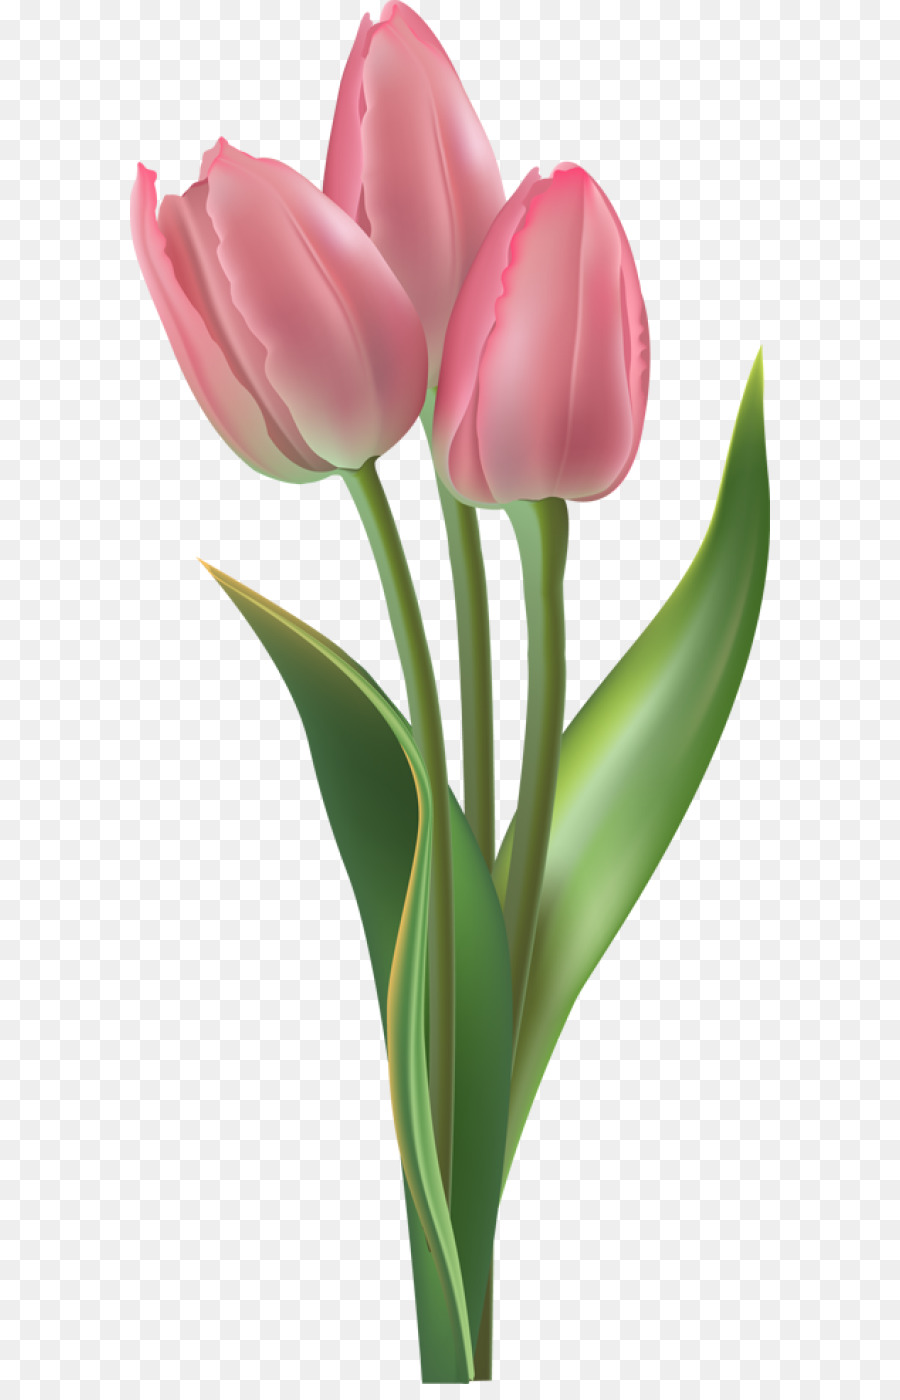 Tulip Flower Clip art - tulip png download - 640*1384 - Free Transparent Tulip png Download.